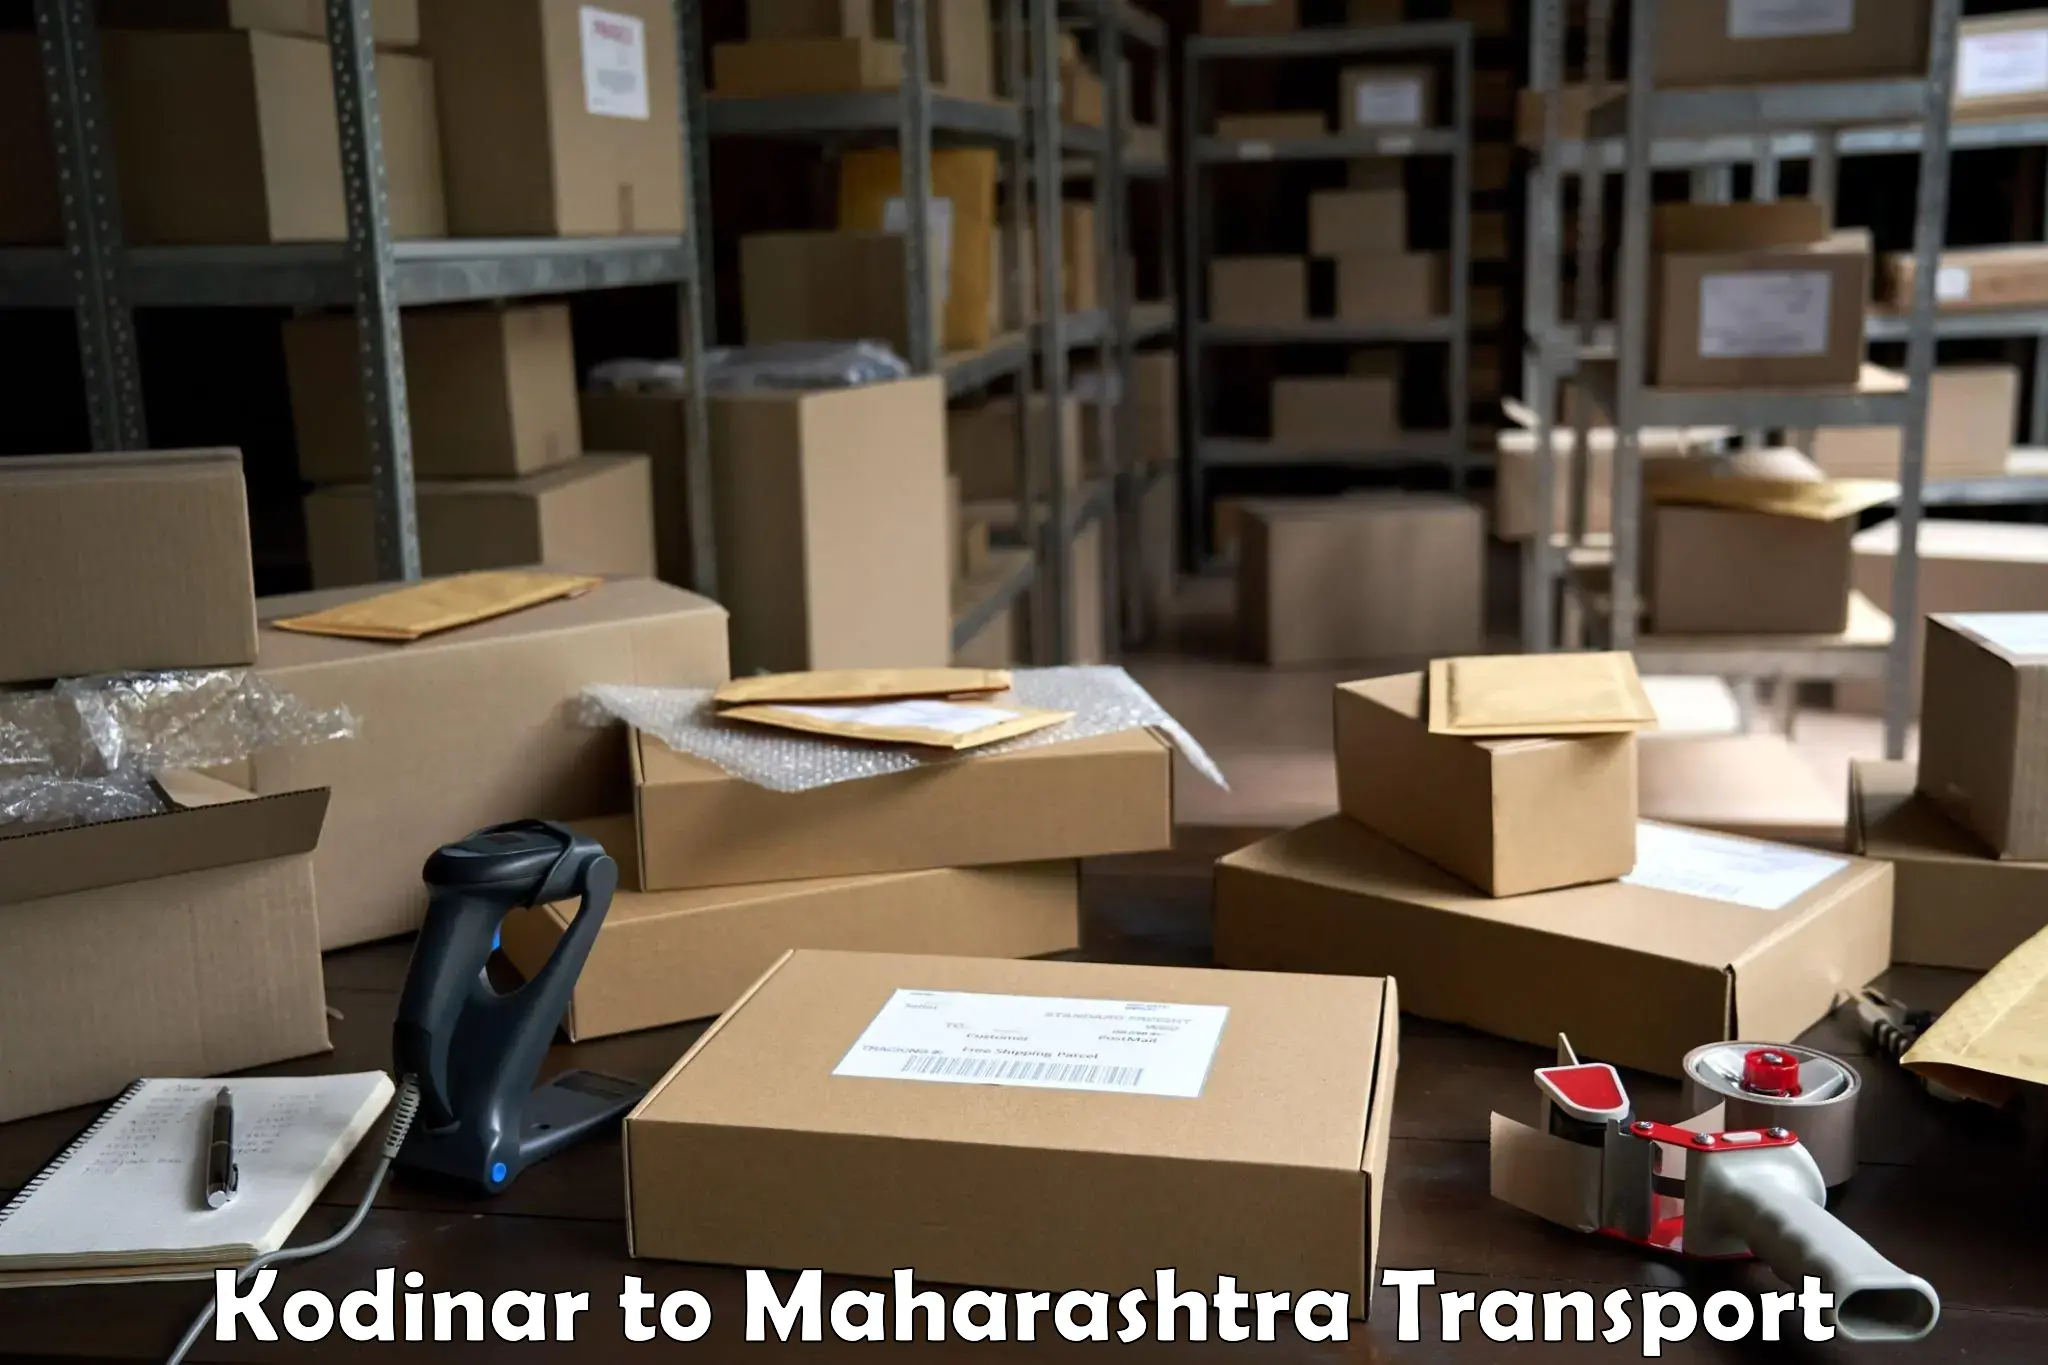 Truck transport companies in India Kodinar to Tata Institute of Social Sciences Mumbai